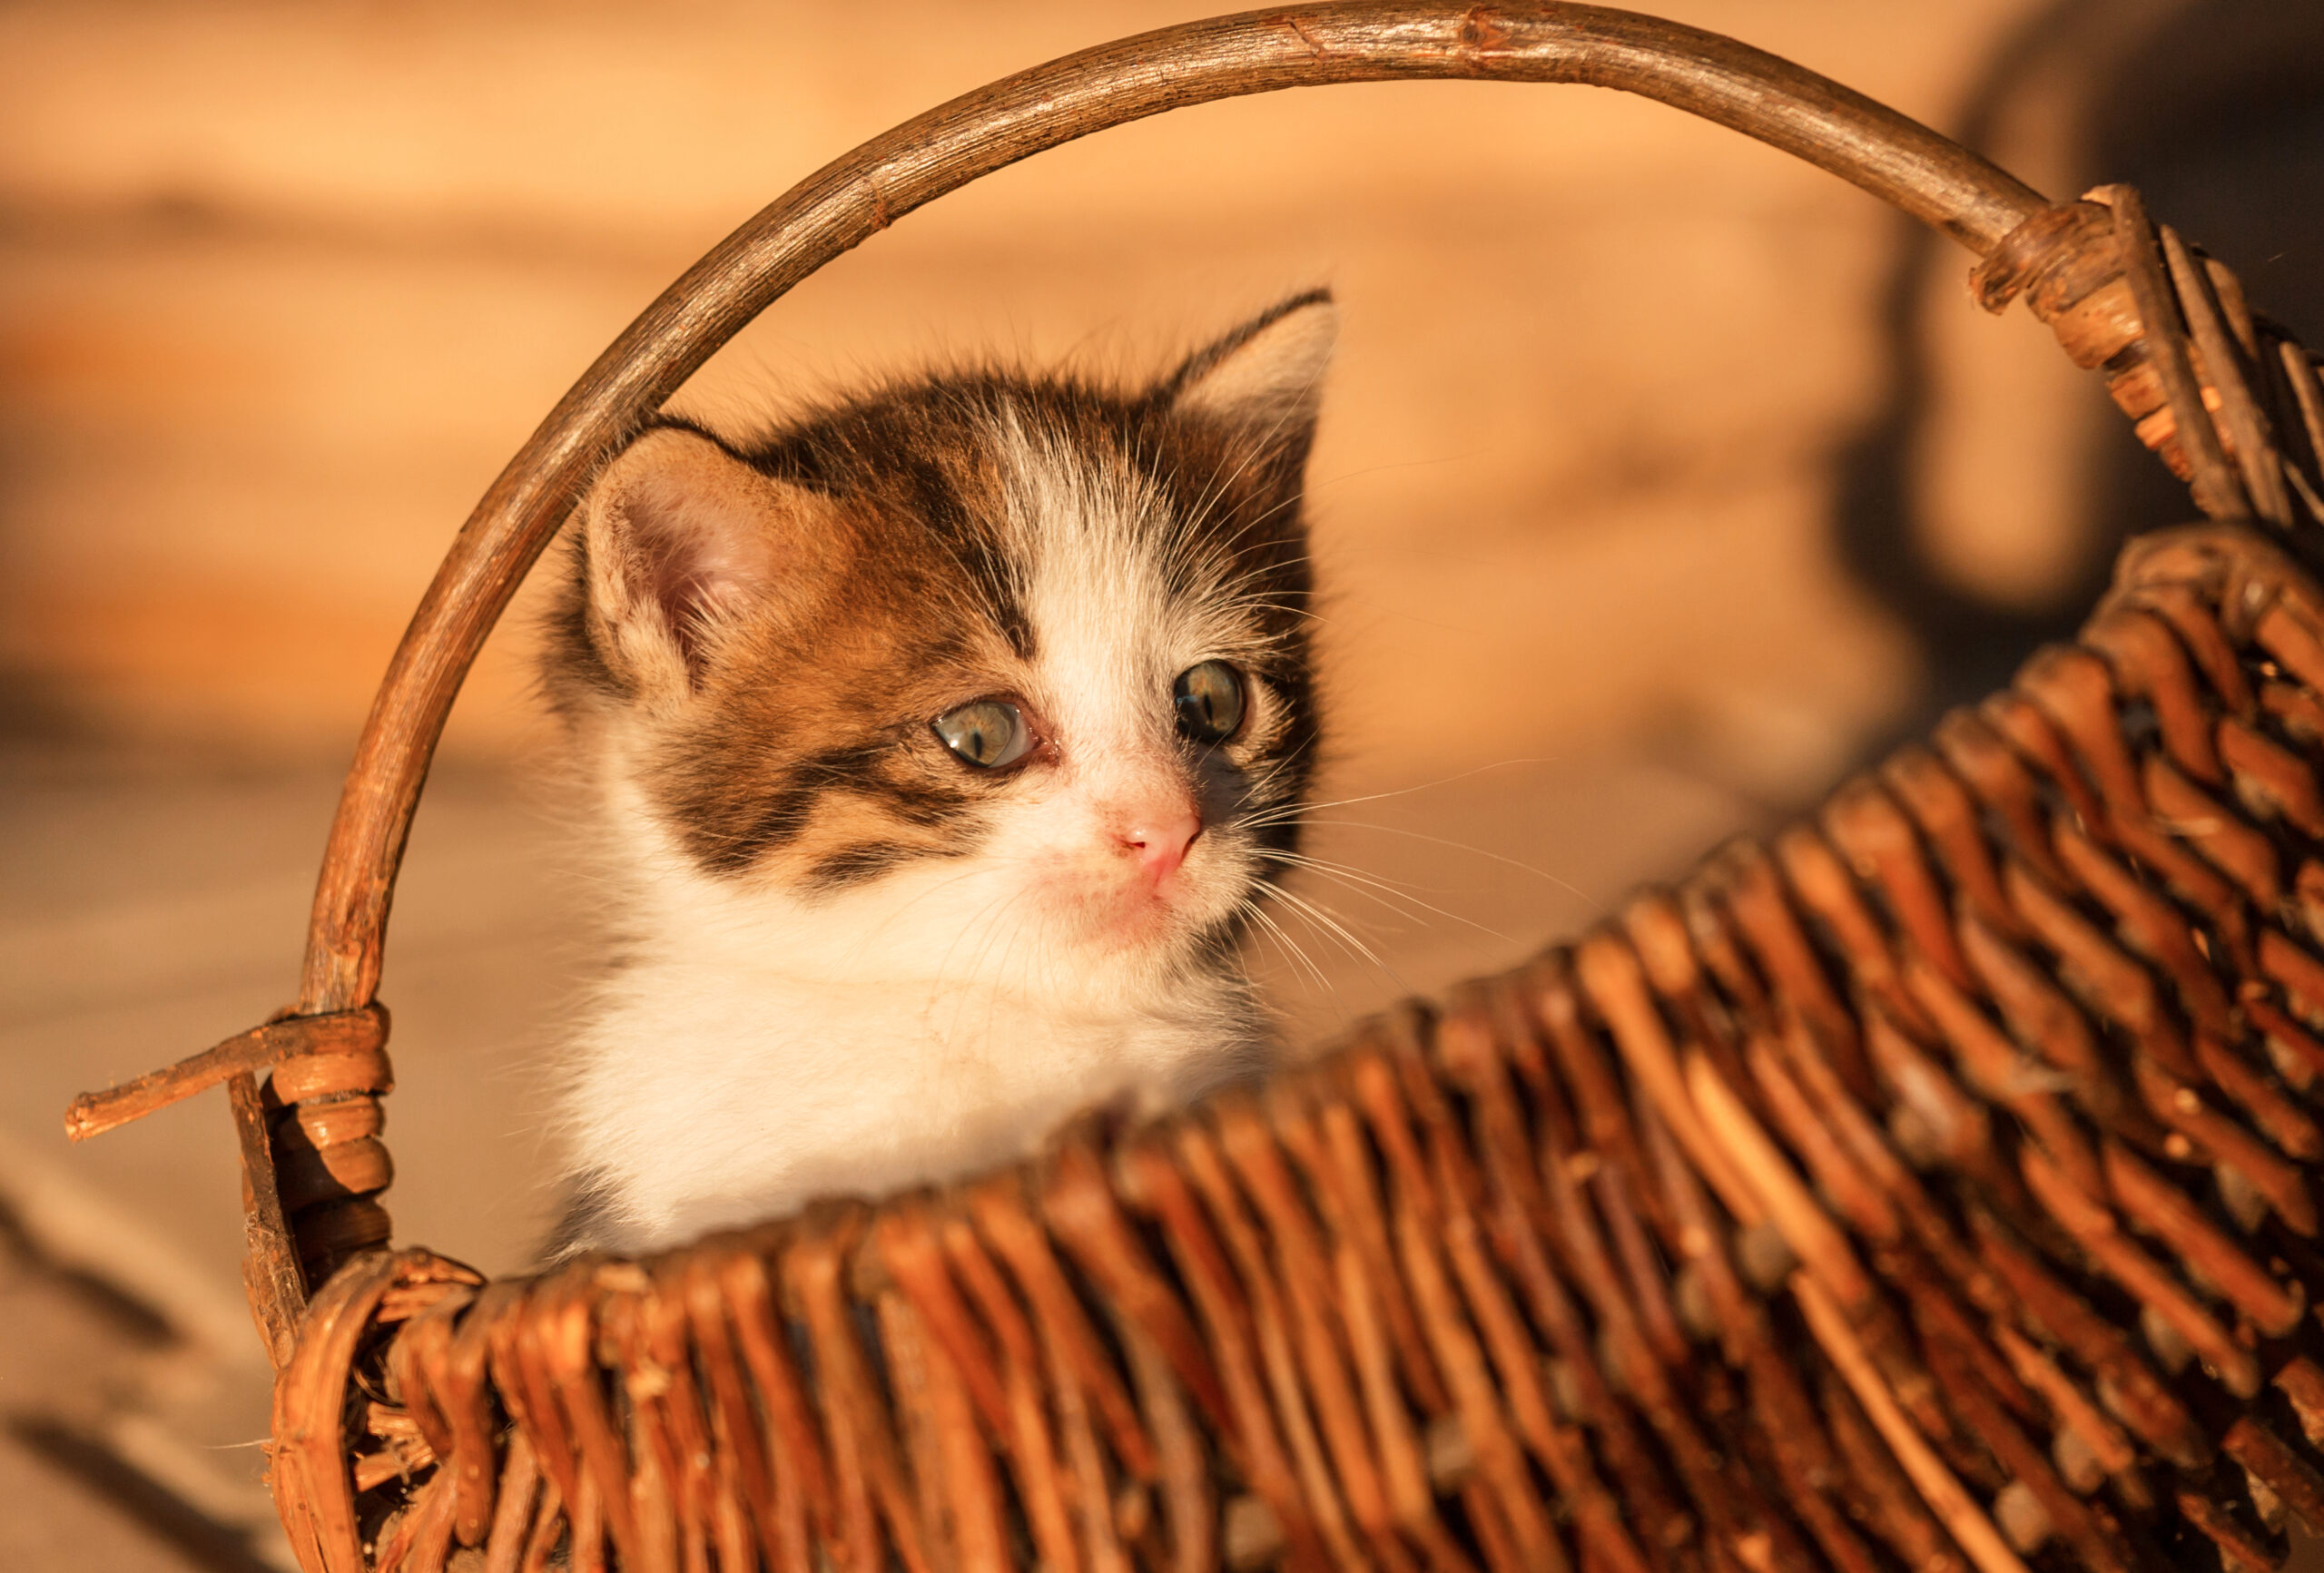 A kitten looking at a chicken eggs basket